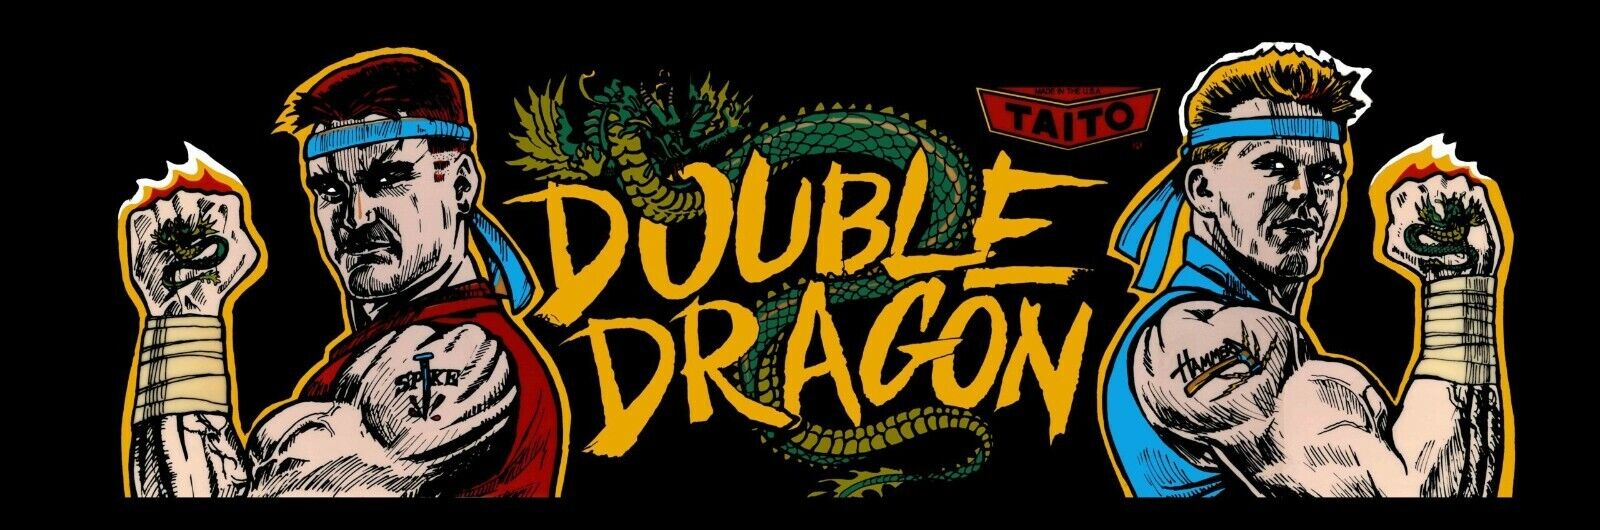 Double Dragon Arcade Marquee – 26″ x 8″